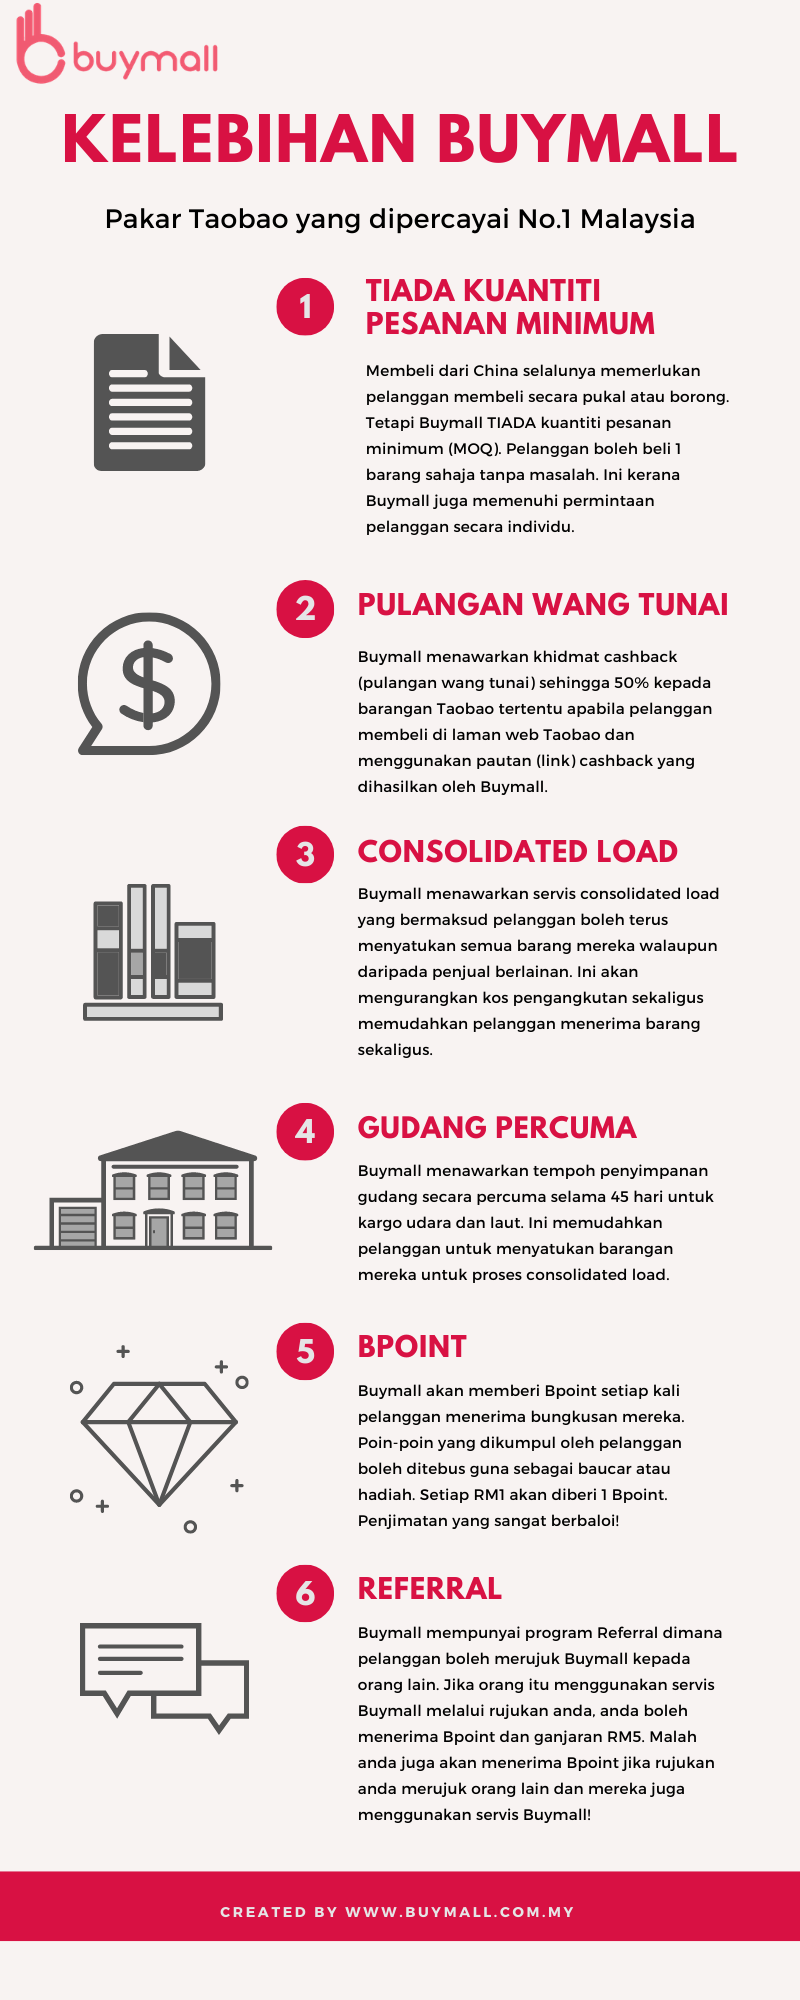 Infographic Kelebihan Buymall